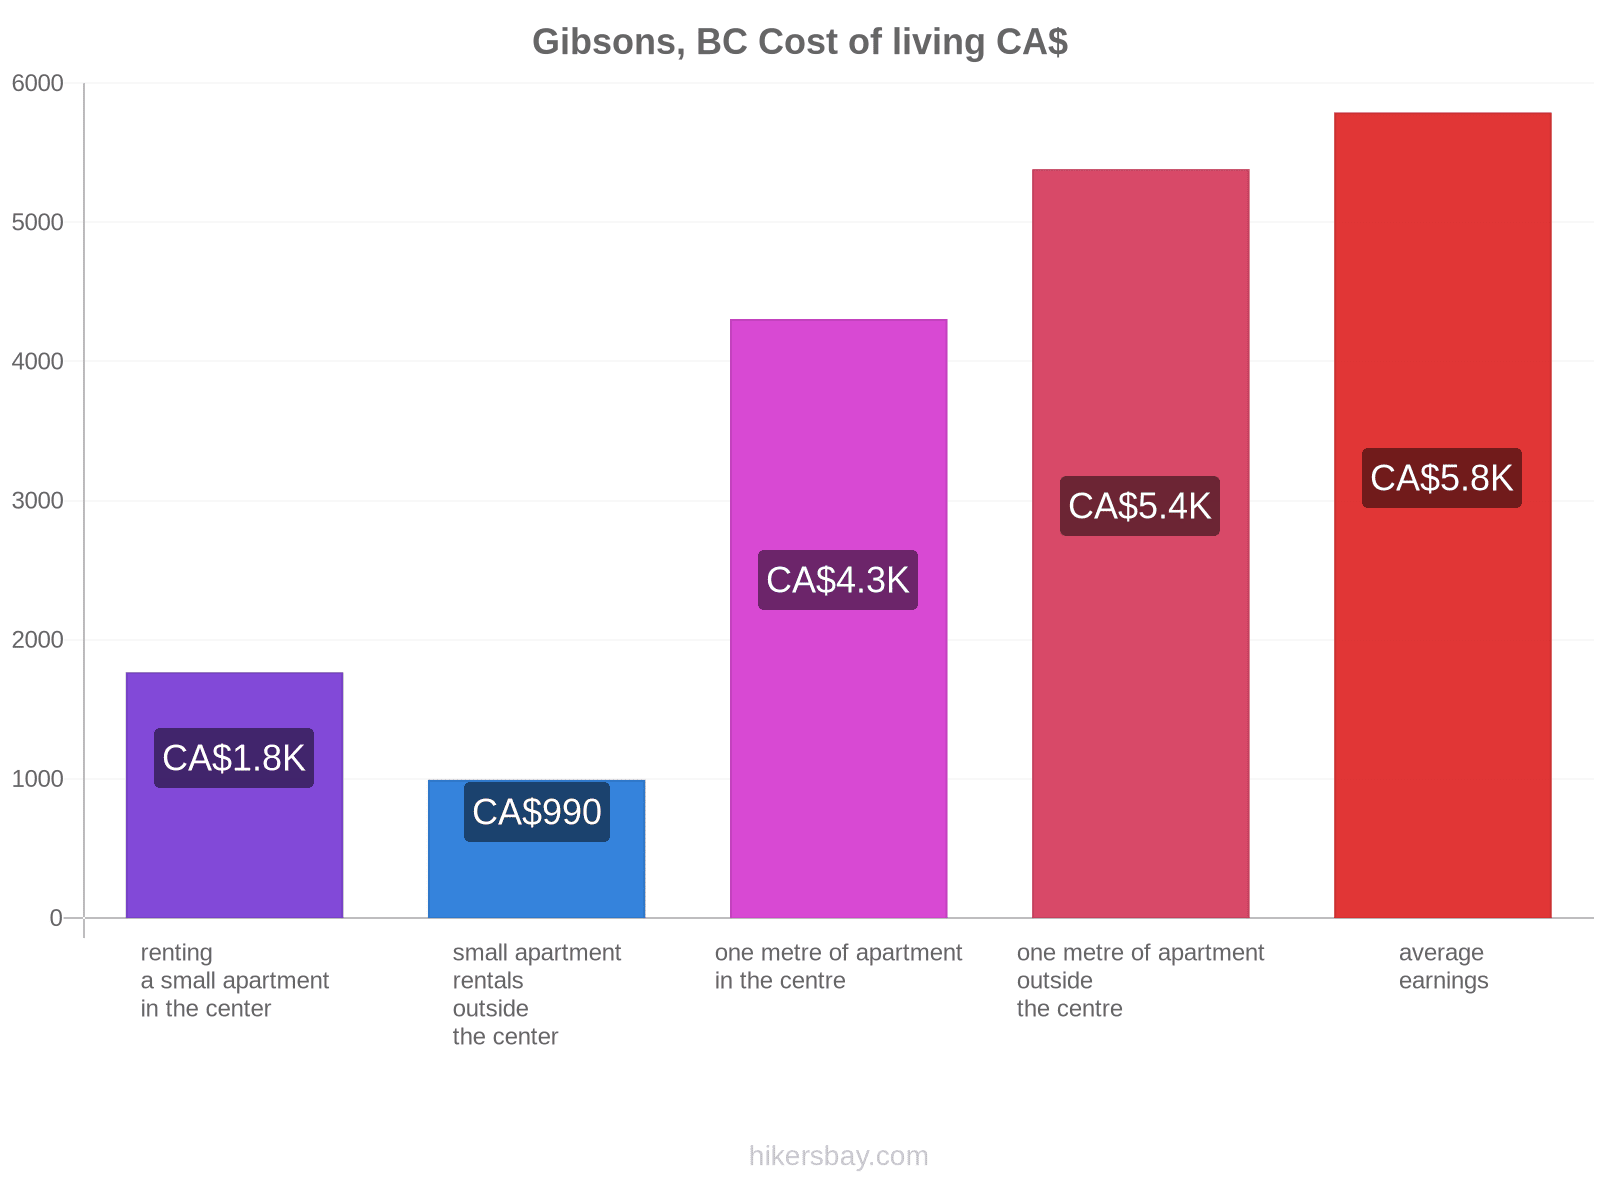 Gibsons, BC cost of living hikersbay.com